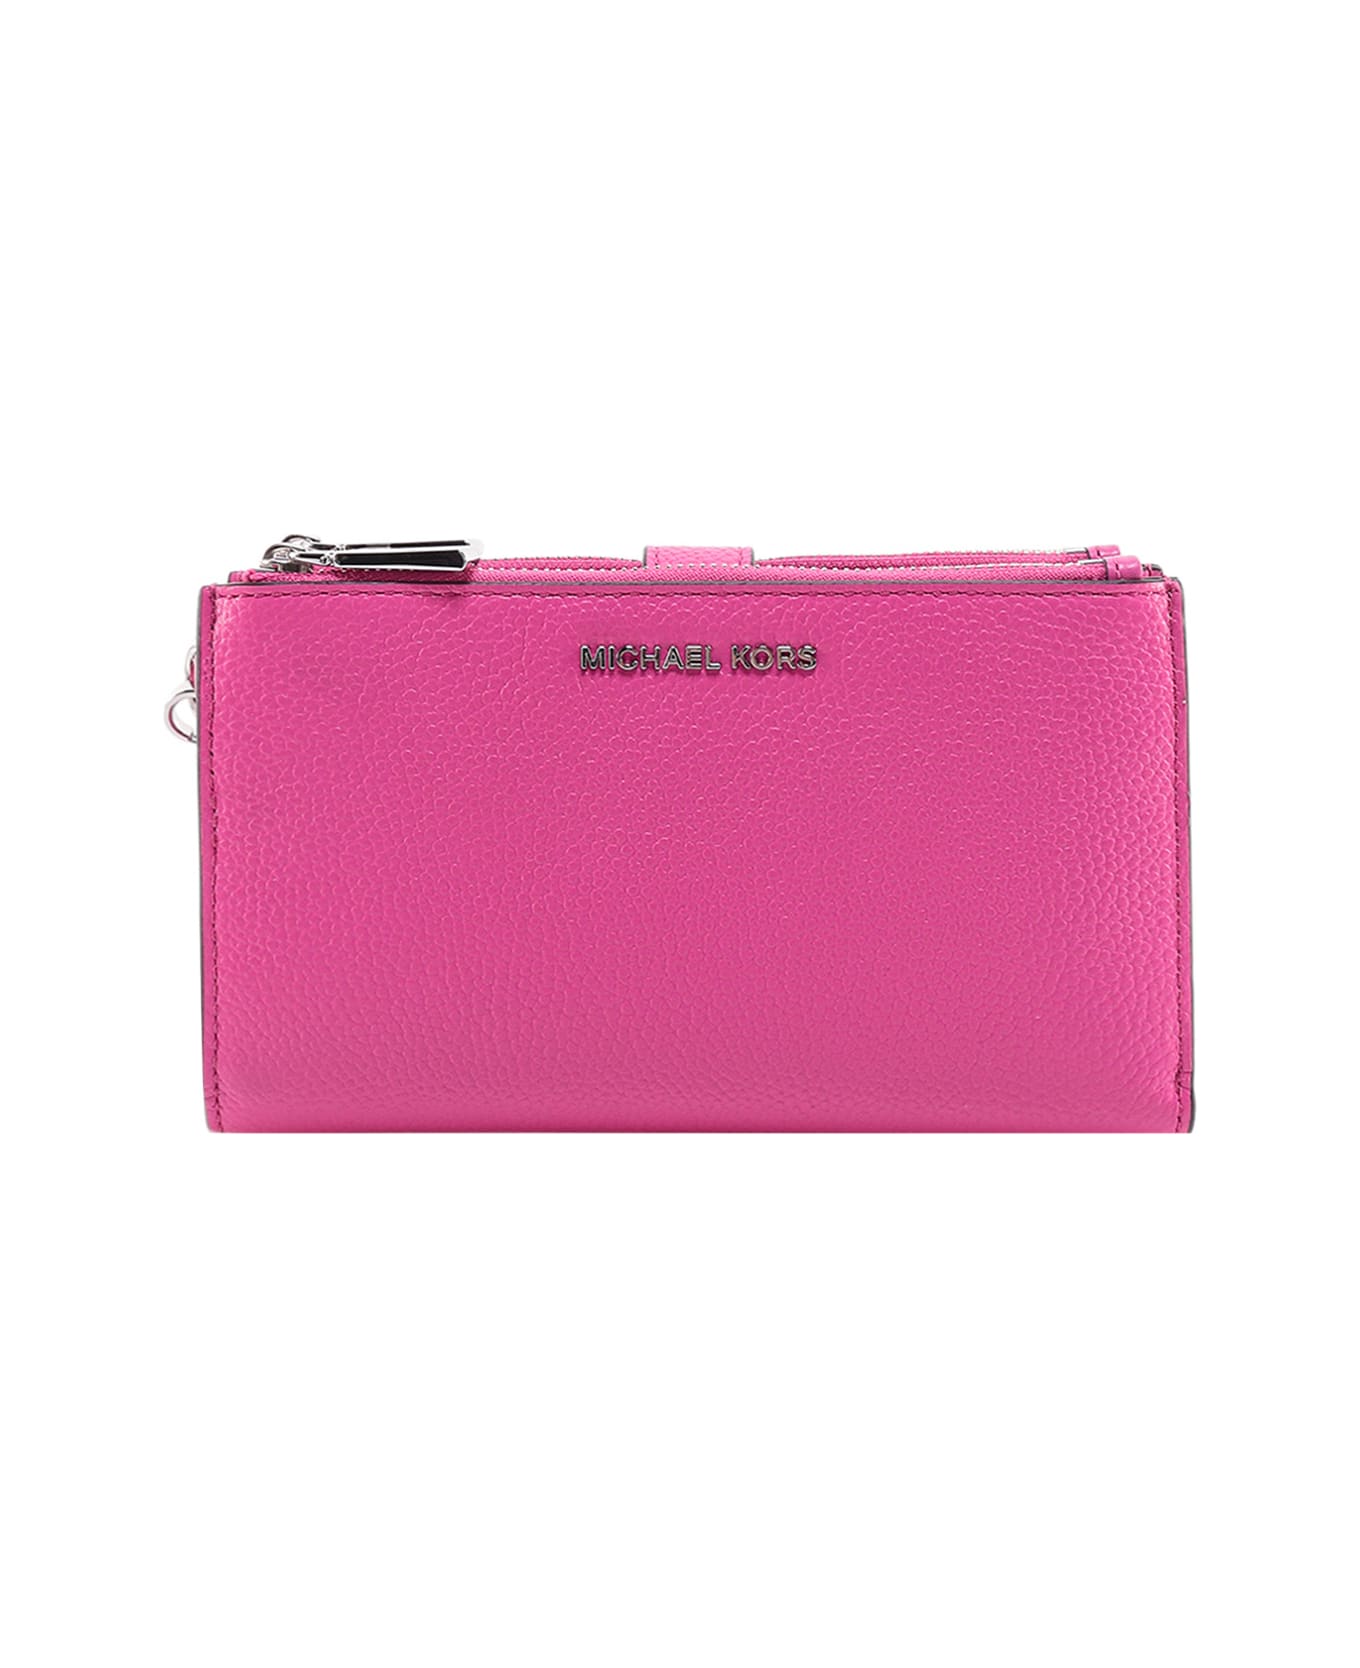 Michael Kors Jet Set Wallet - Pink